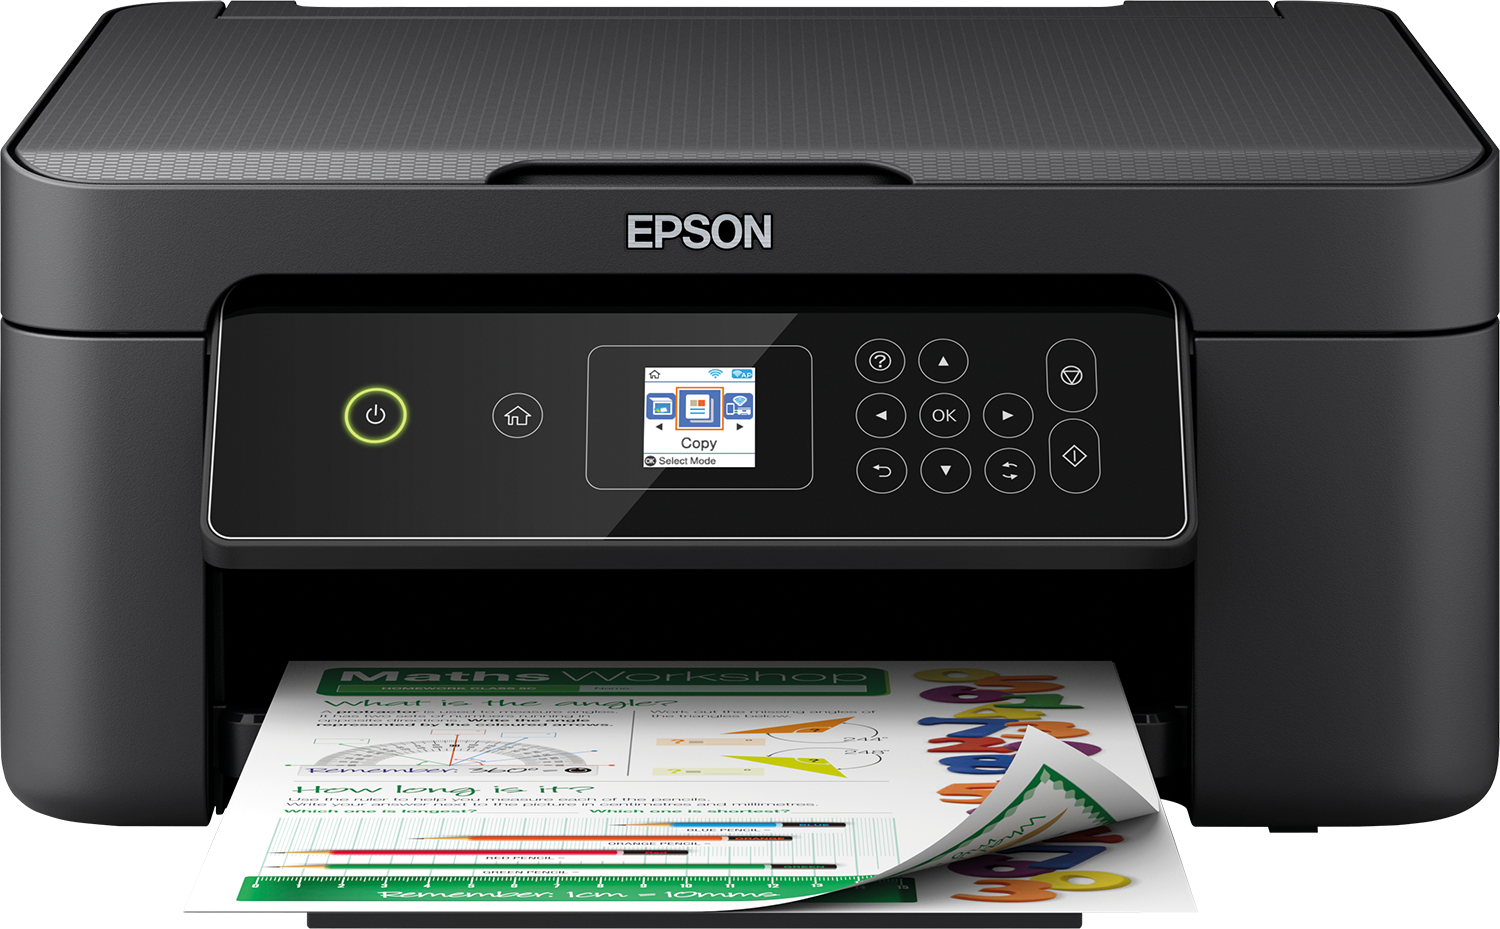 Epson XP-3150/XP-3200/XP-3205 Series Printer - Featured